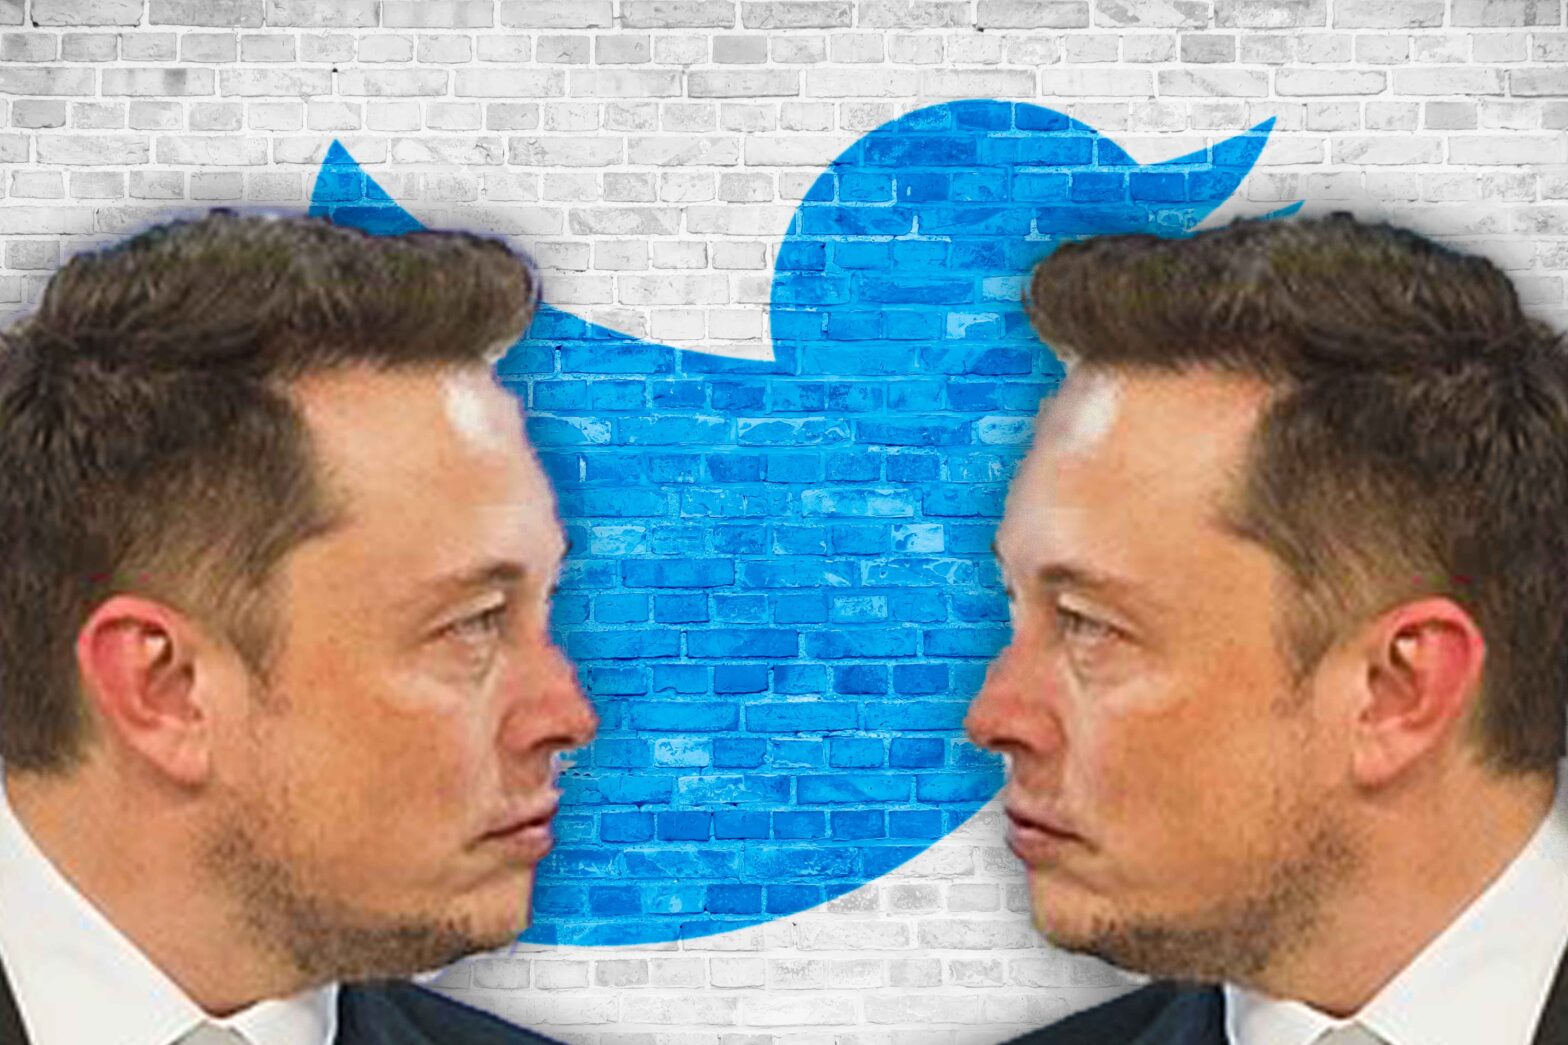 Musk-Twitter trial to begin 17 October